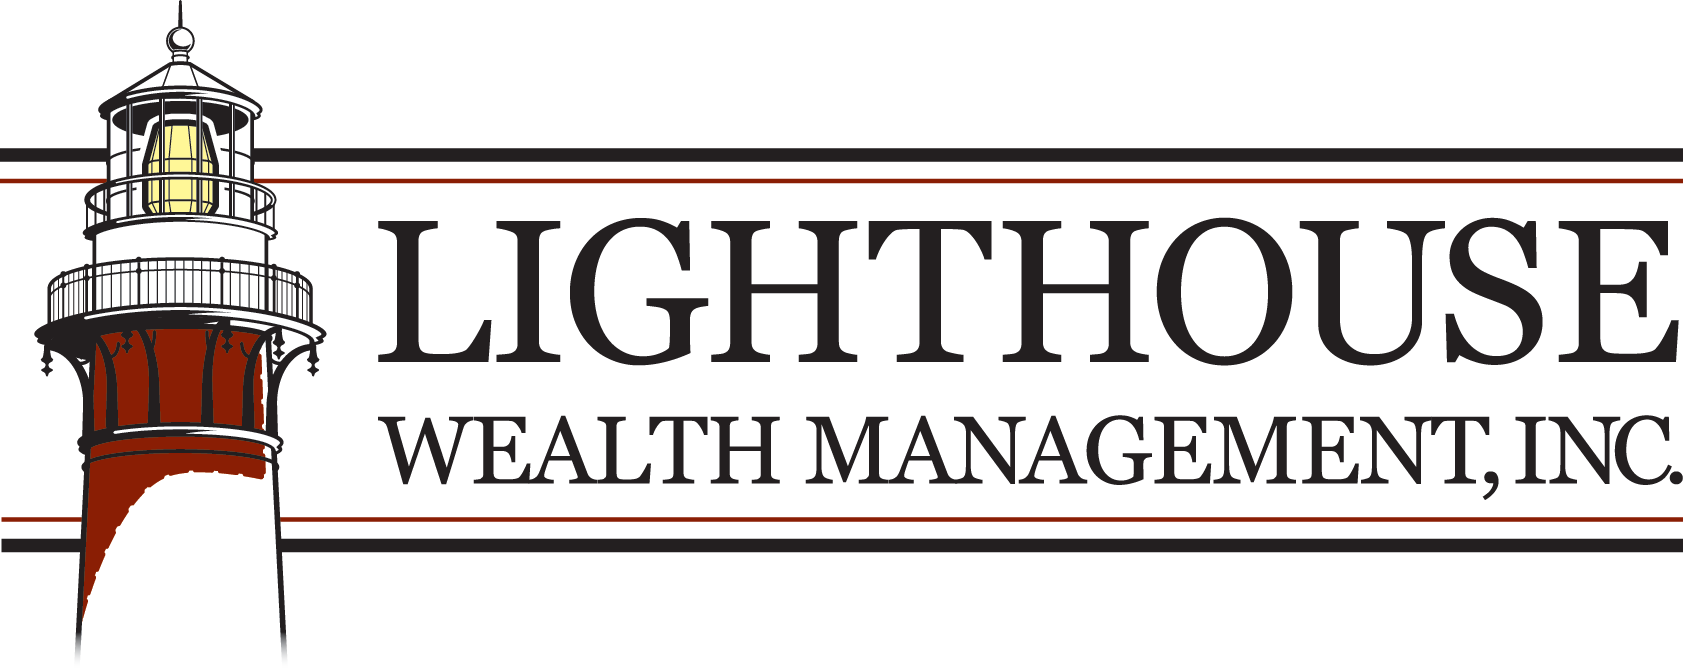 Lighthouse Wealth Management